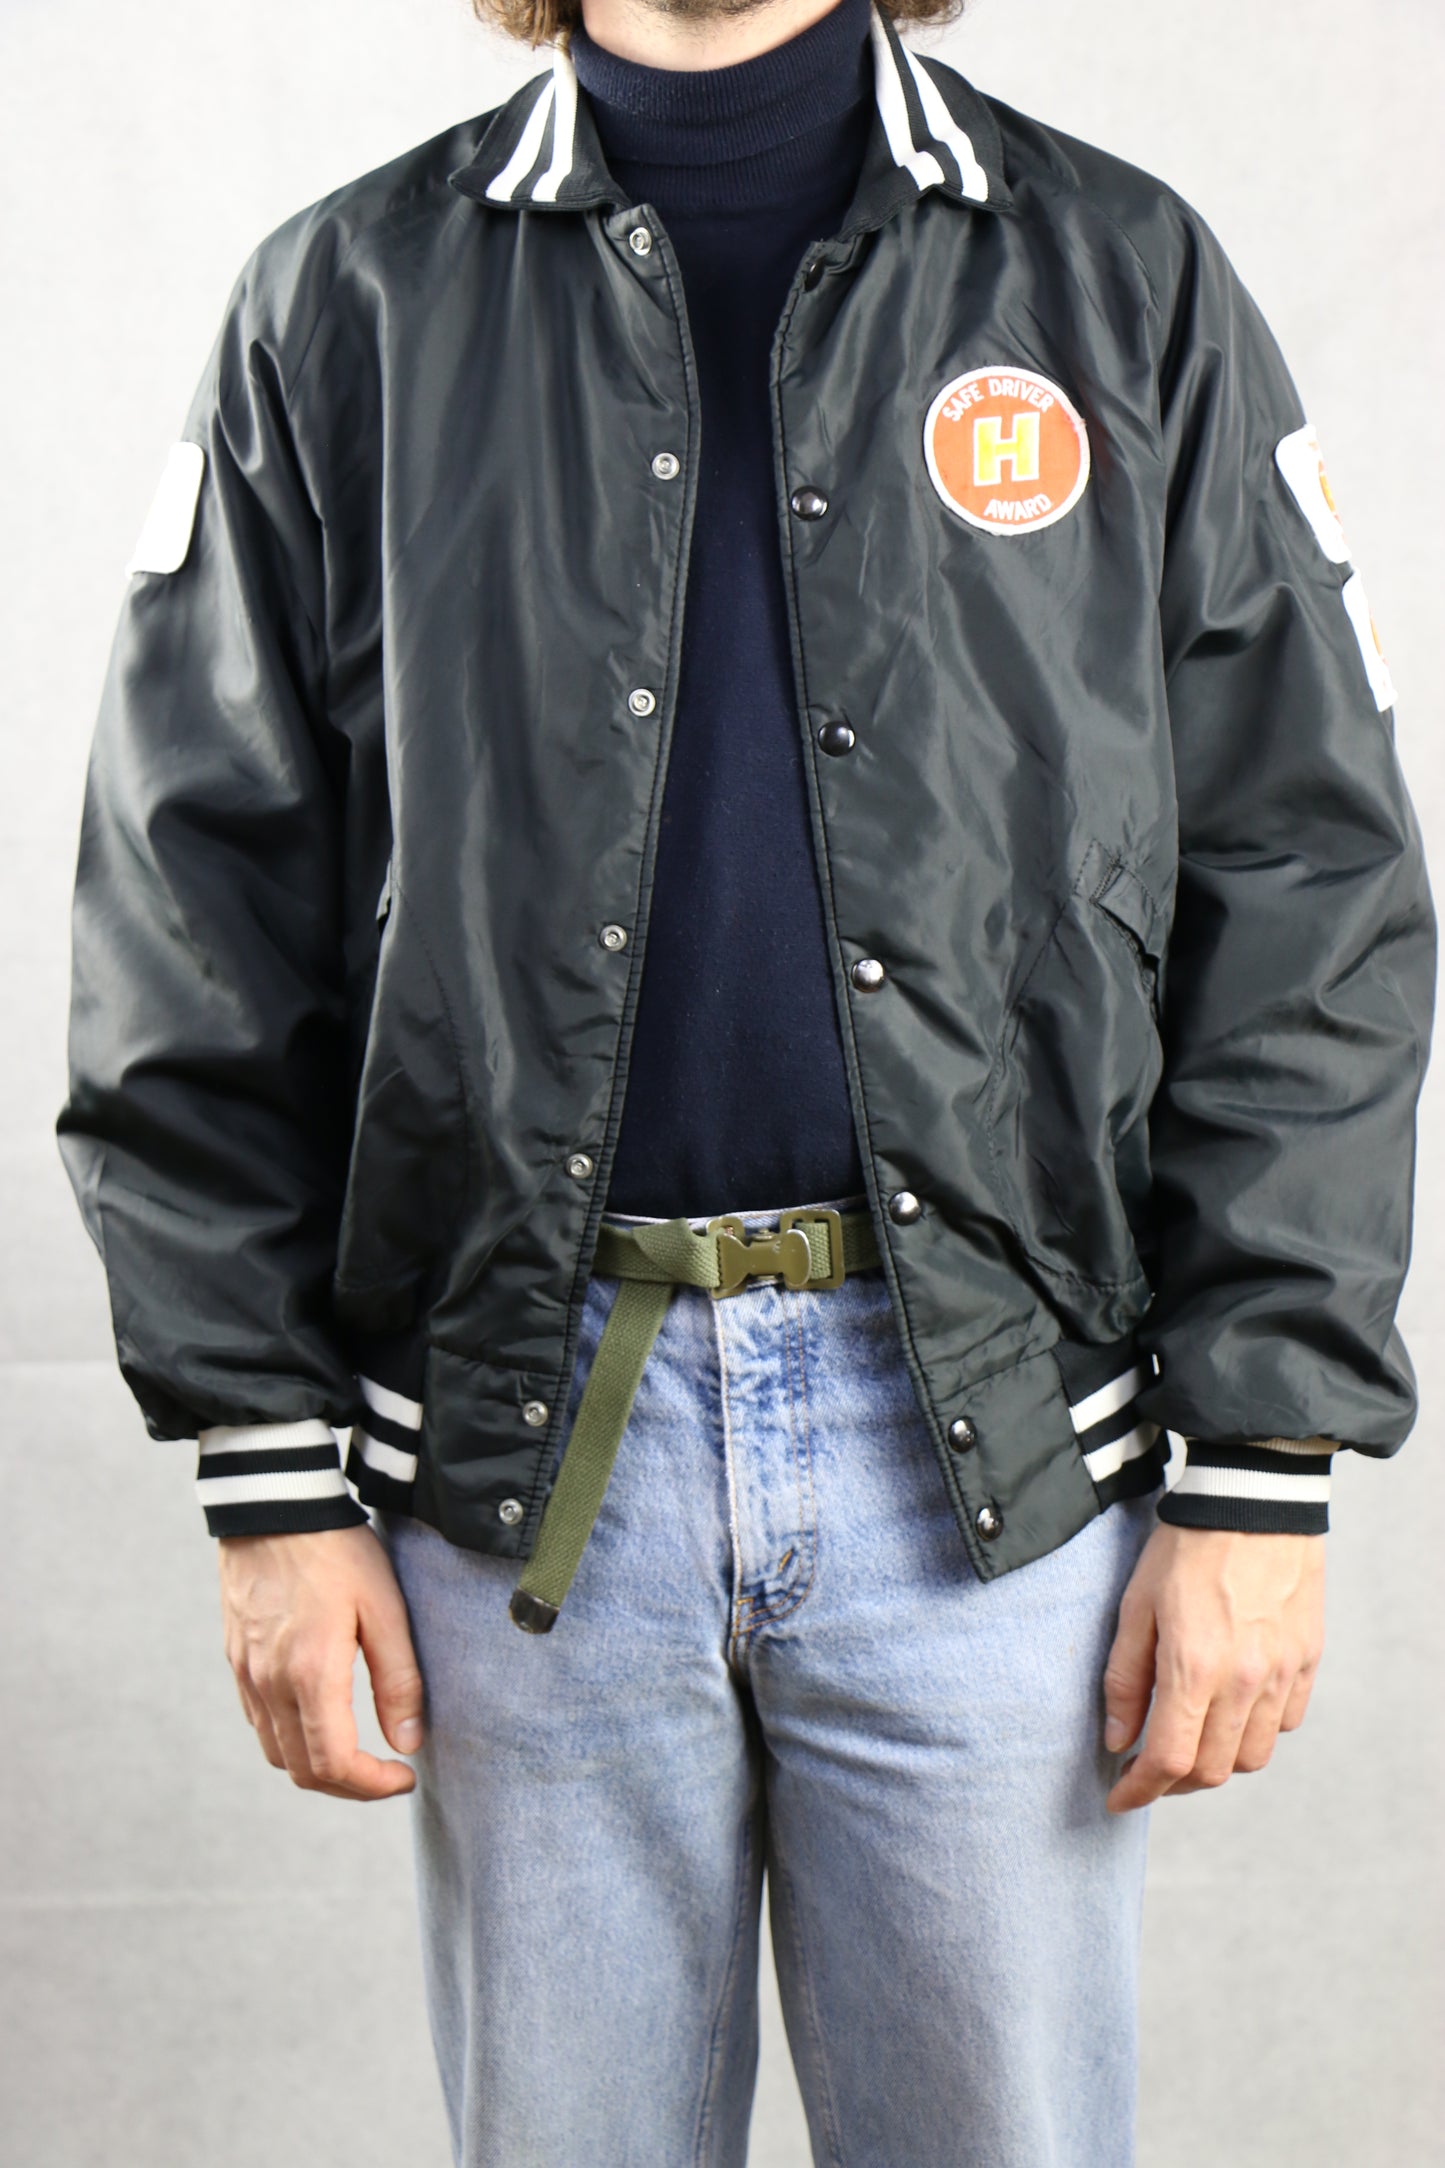 Satin Black Bomber Jacket - vintage clothing clochard92.com